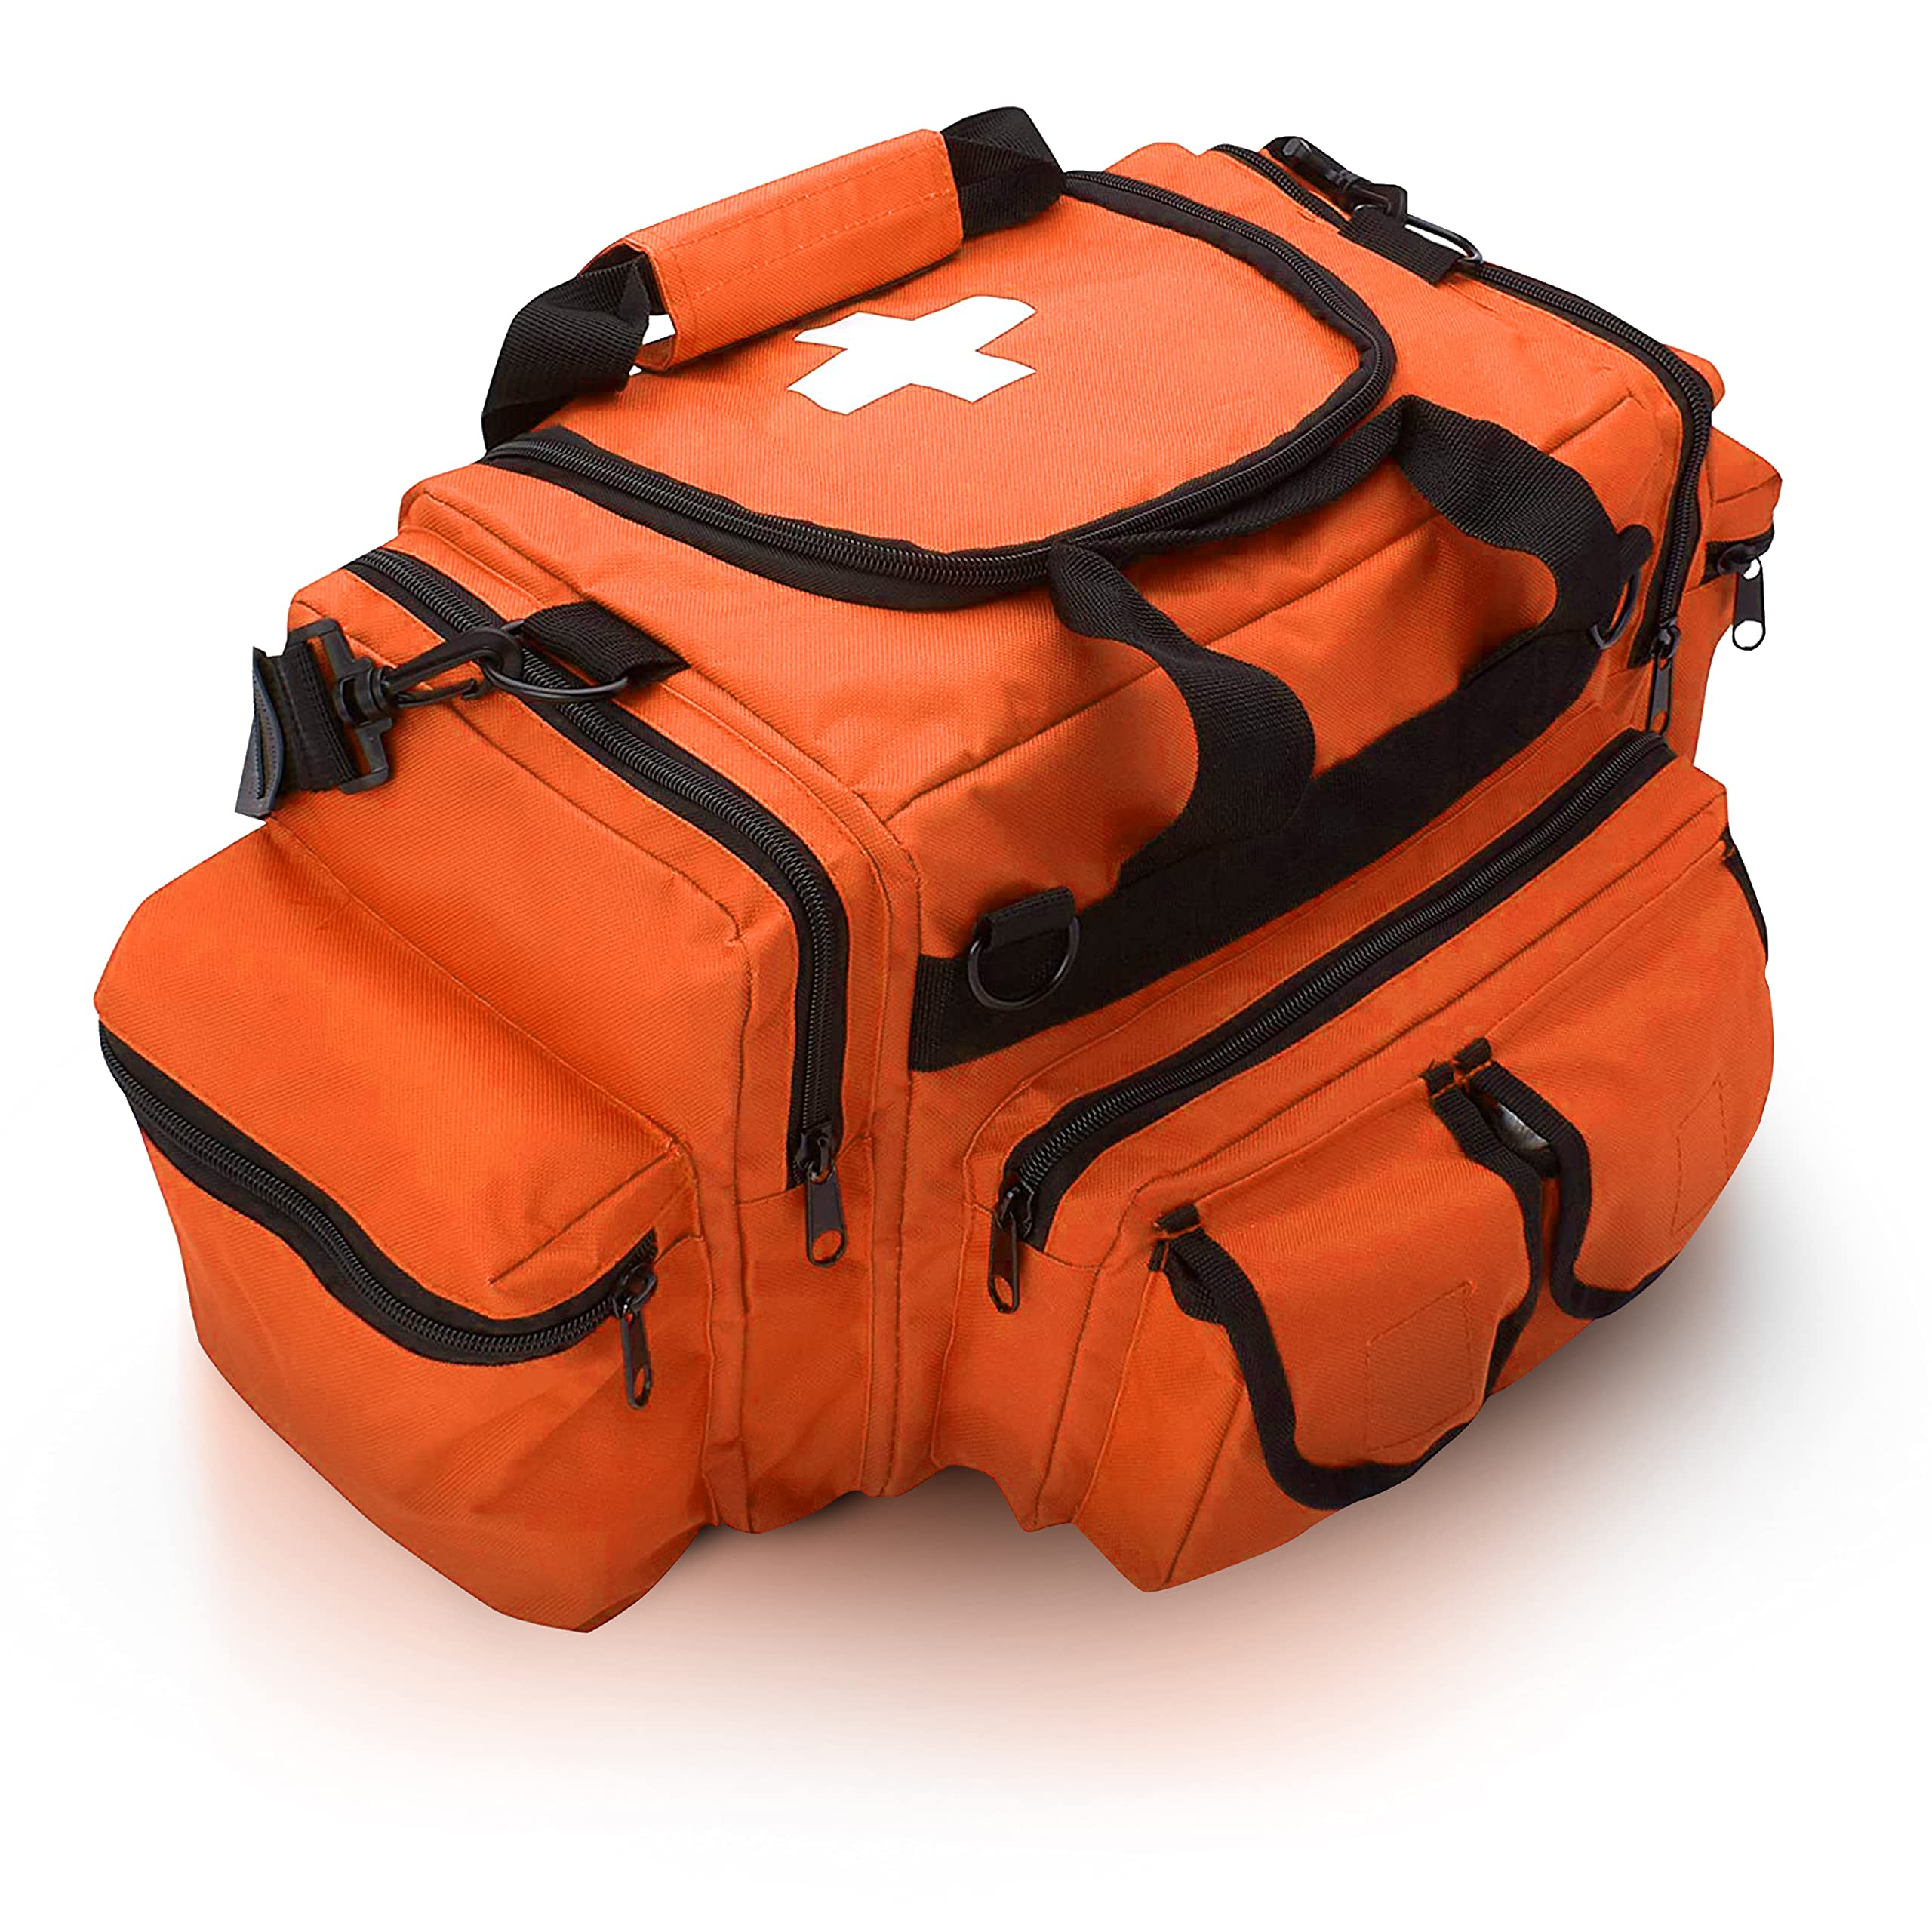 ASA TECHMED First Aid Responder EMS Emergency Medical Trauma Bag Deluxe, Orange